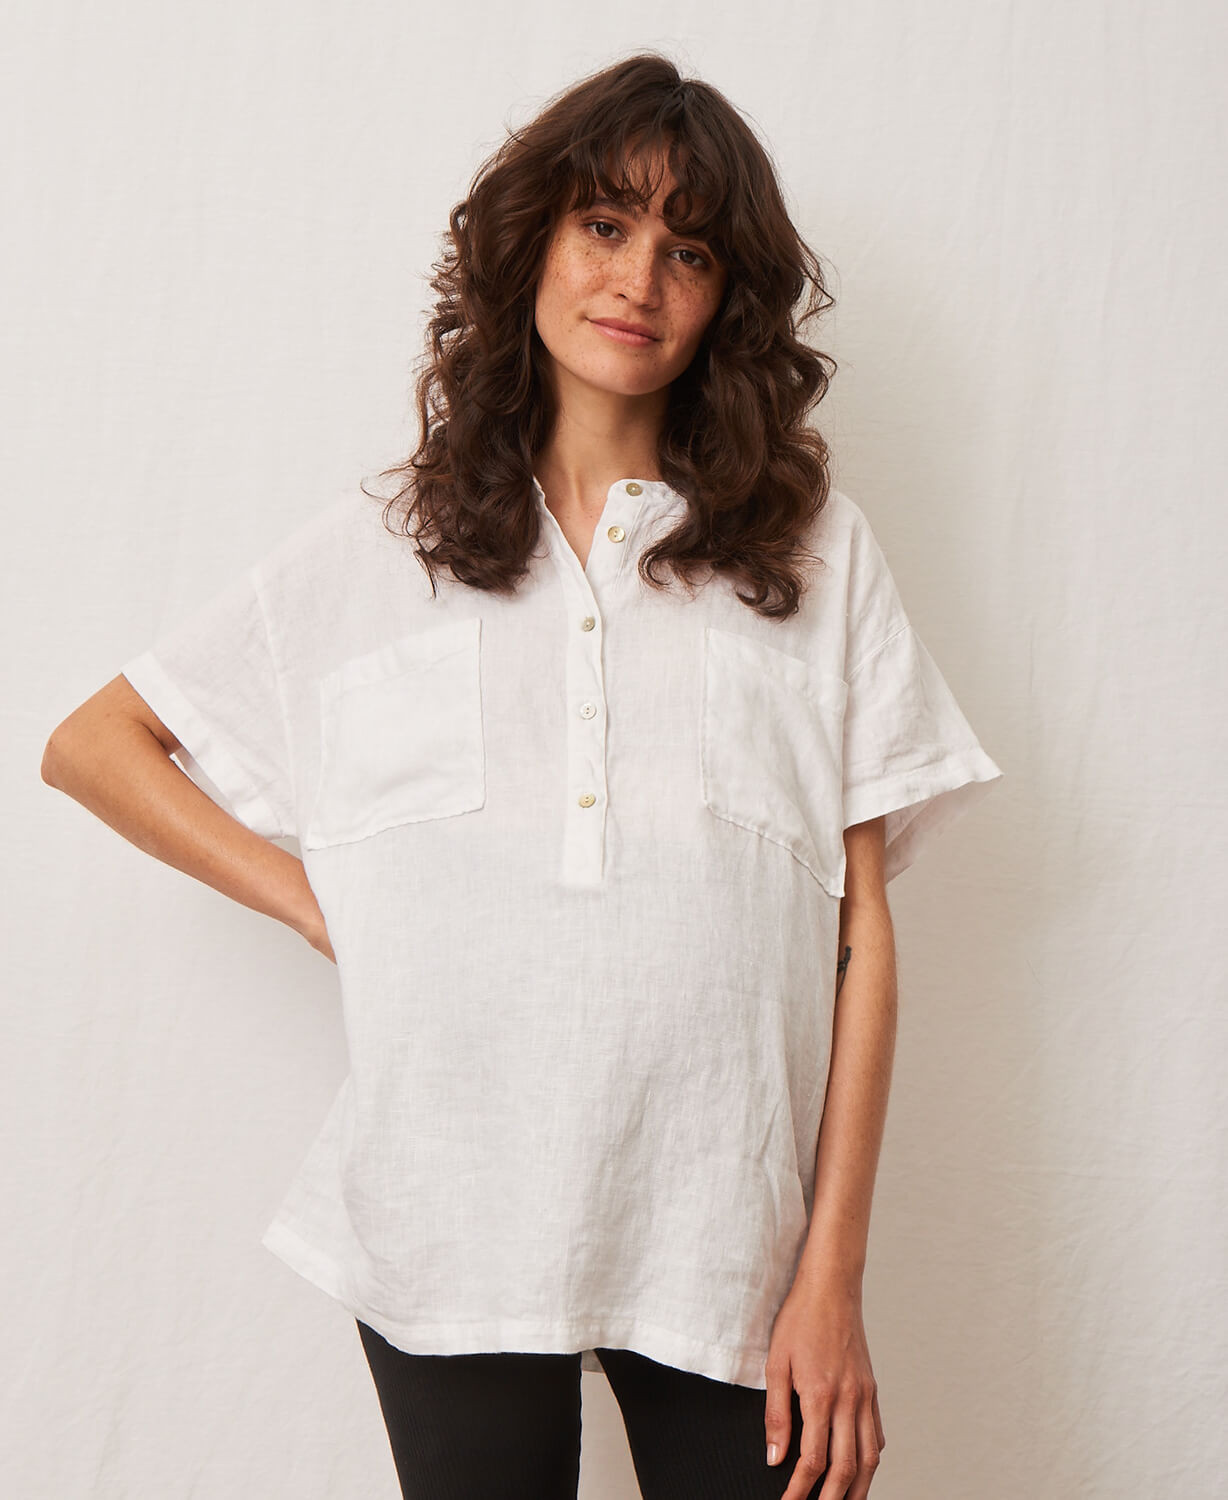 https://www.jolibump.com/3095-large_default/chemise-femme-enceinte-lin-blanc-georgia.jpg